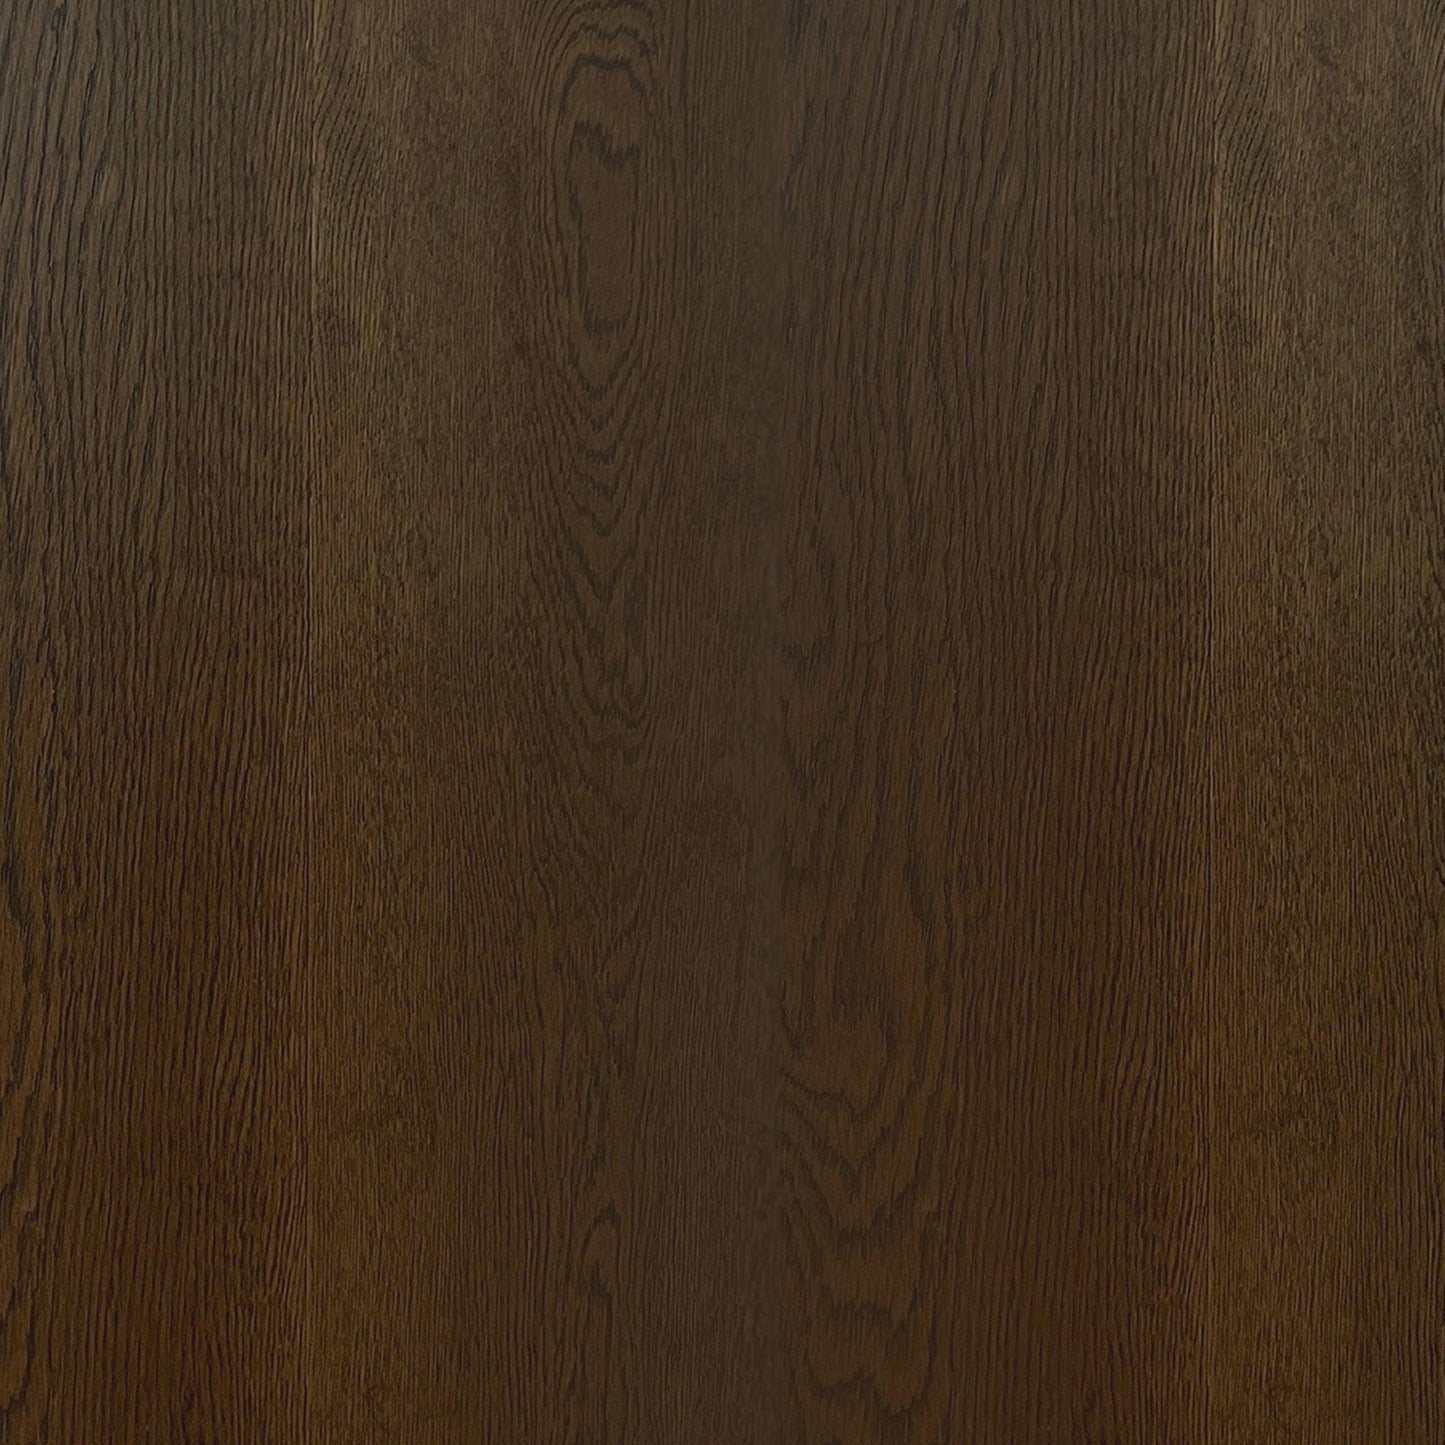 Brown Oak Engineered Timber Flooring by KLD Home